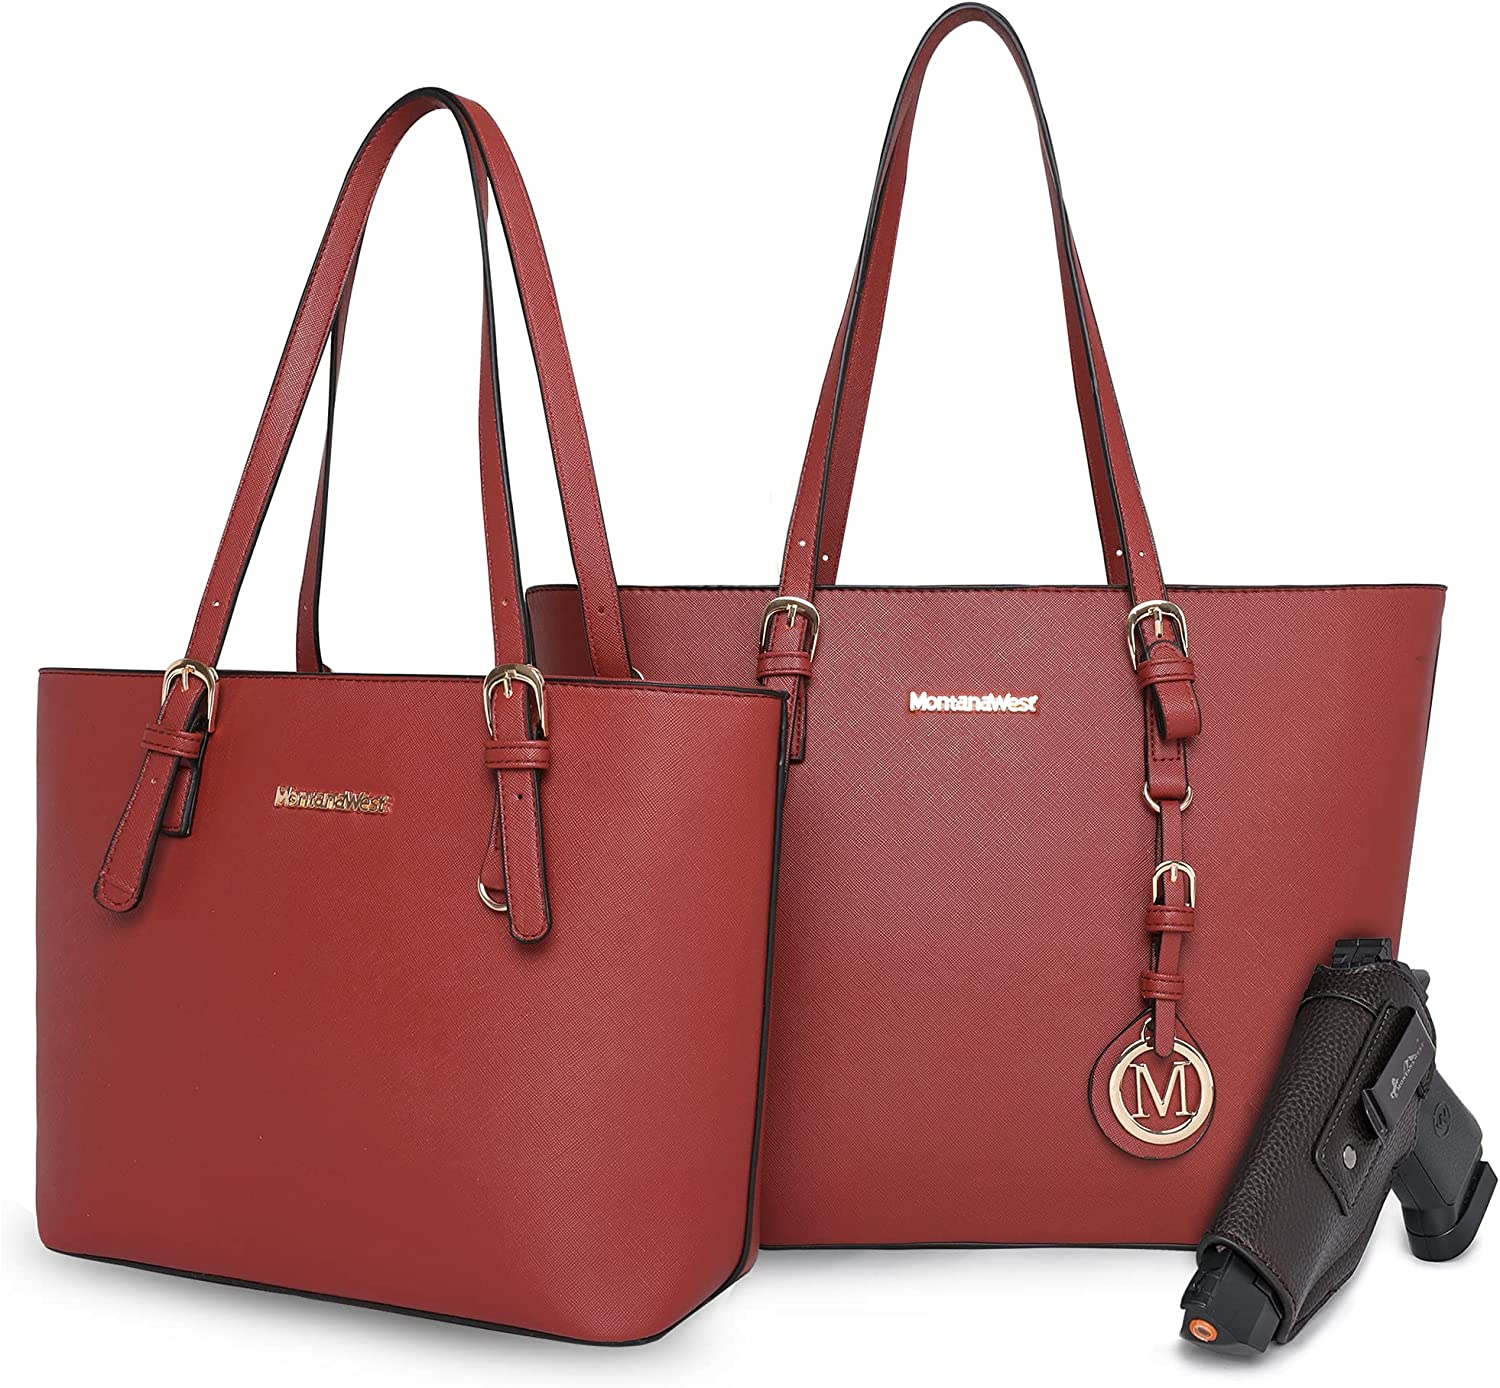 Tote Handbag Set Concealed Carry Purse for Women Large and Medium 2pcs  Fashion S | eBay